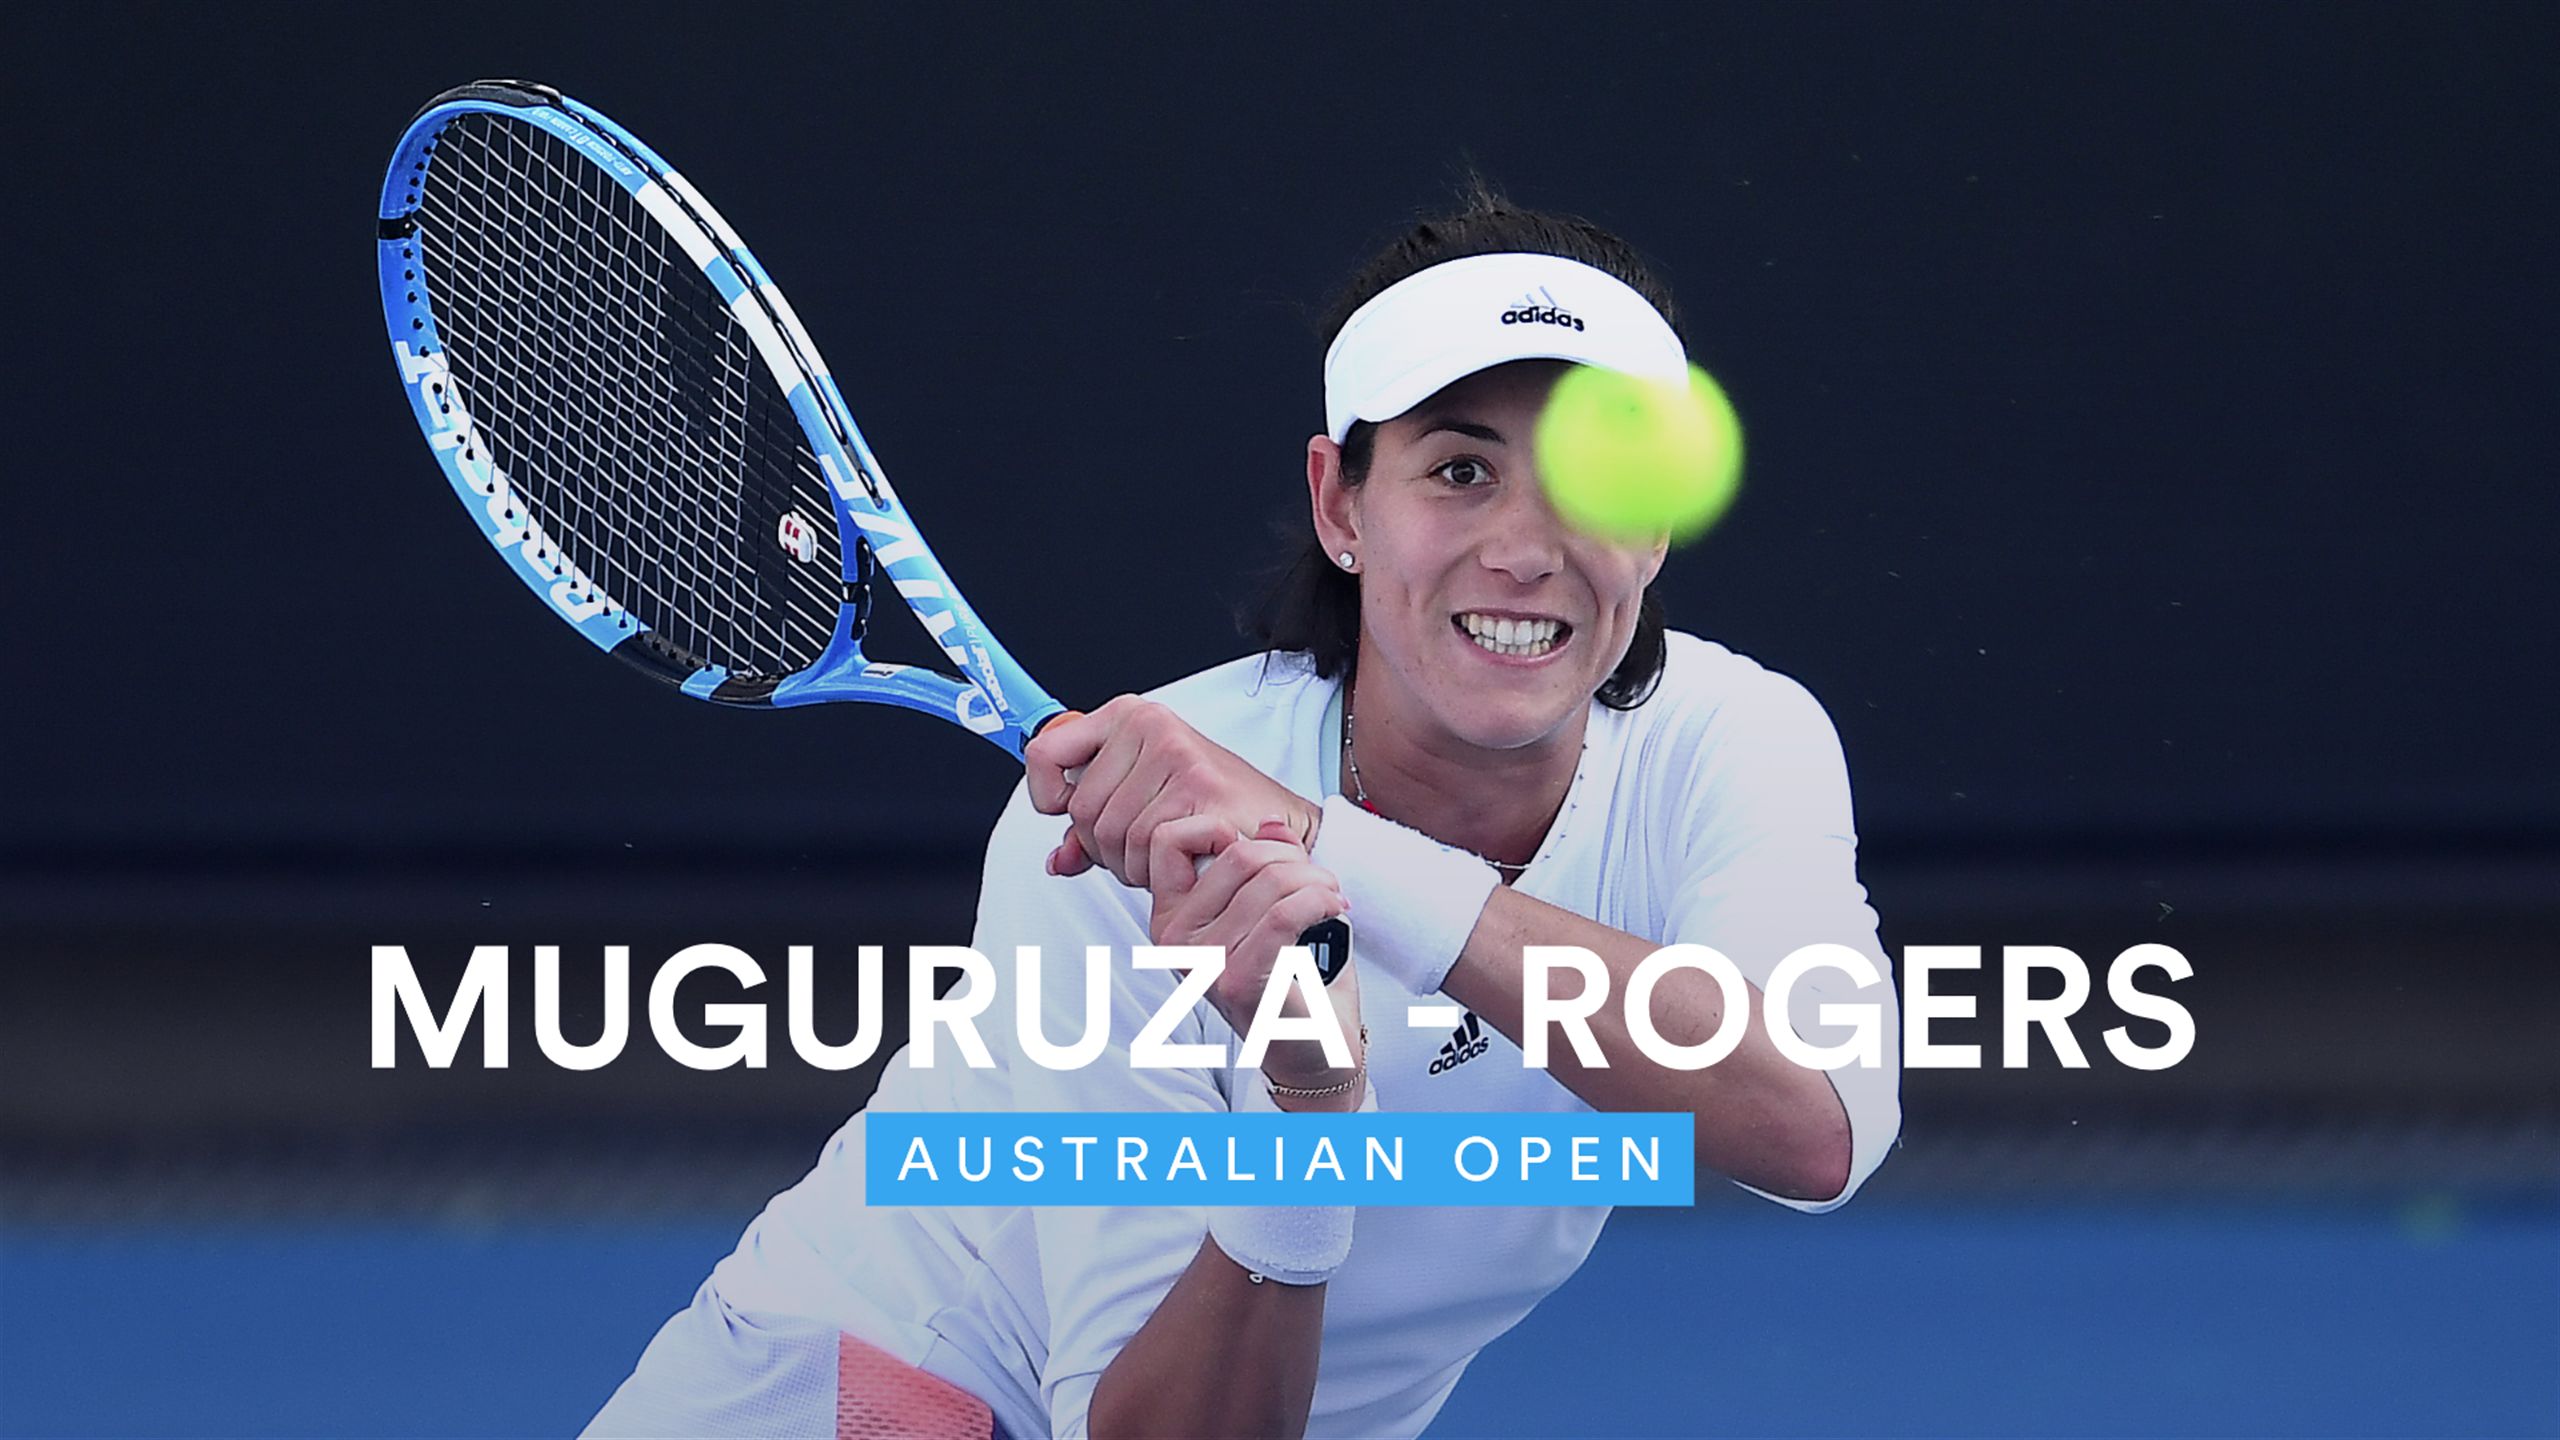 Open de 2020, Muguruza-Rogers: Resumen vídeo del partido - vídeo - Eurosport